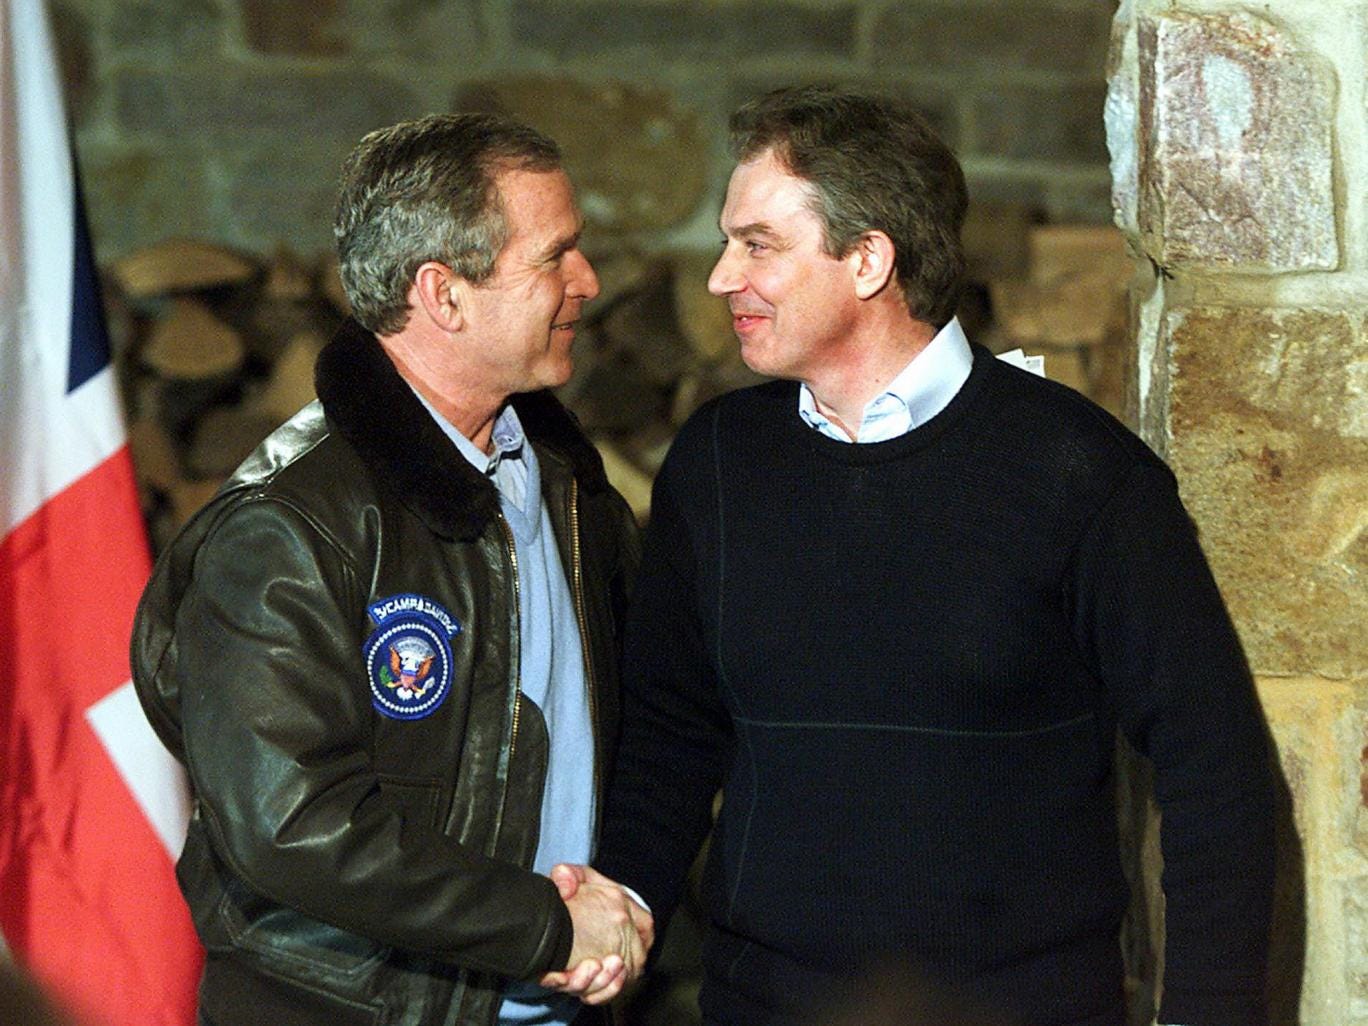 Tony Blair Iraq war memo prompts fresh calls for Chilcot